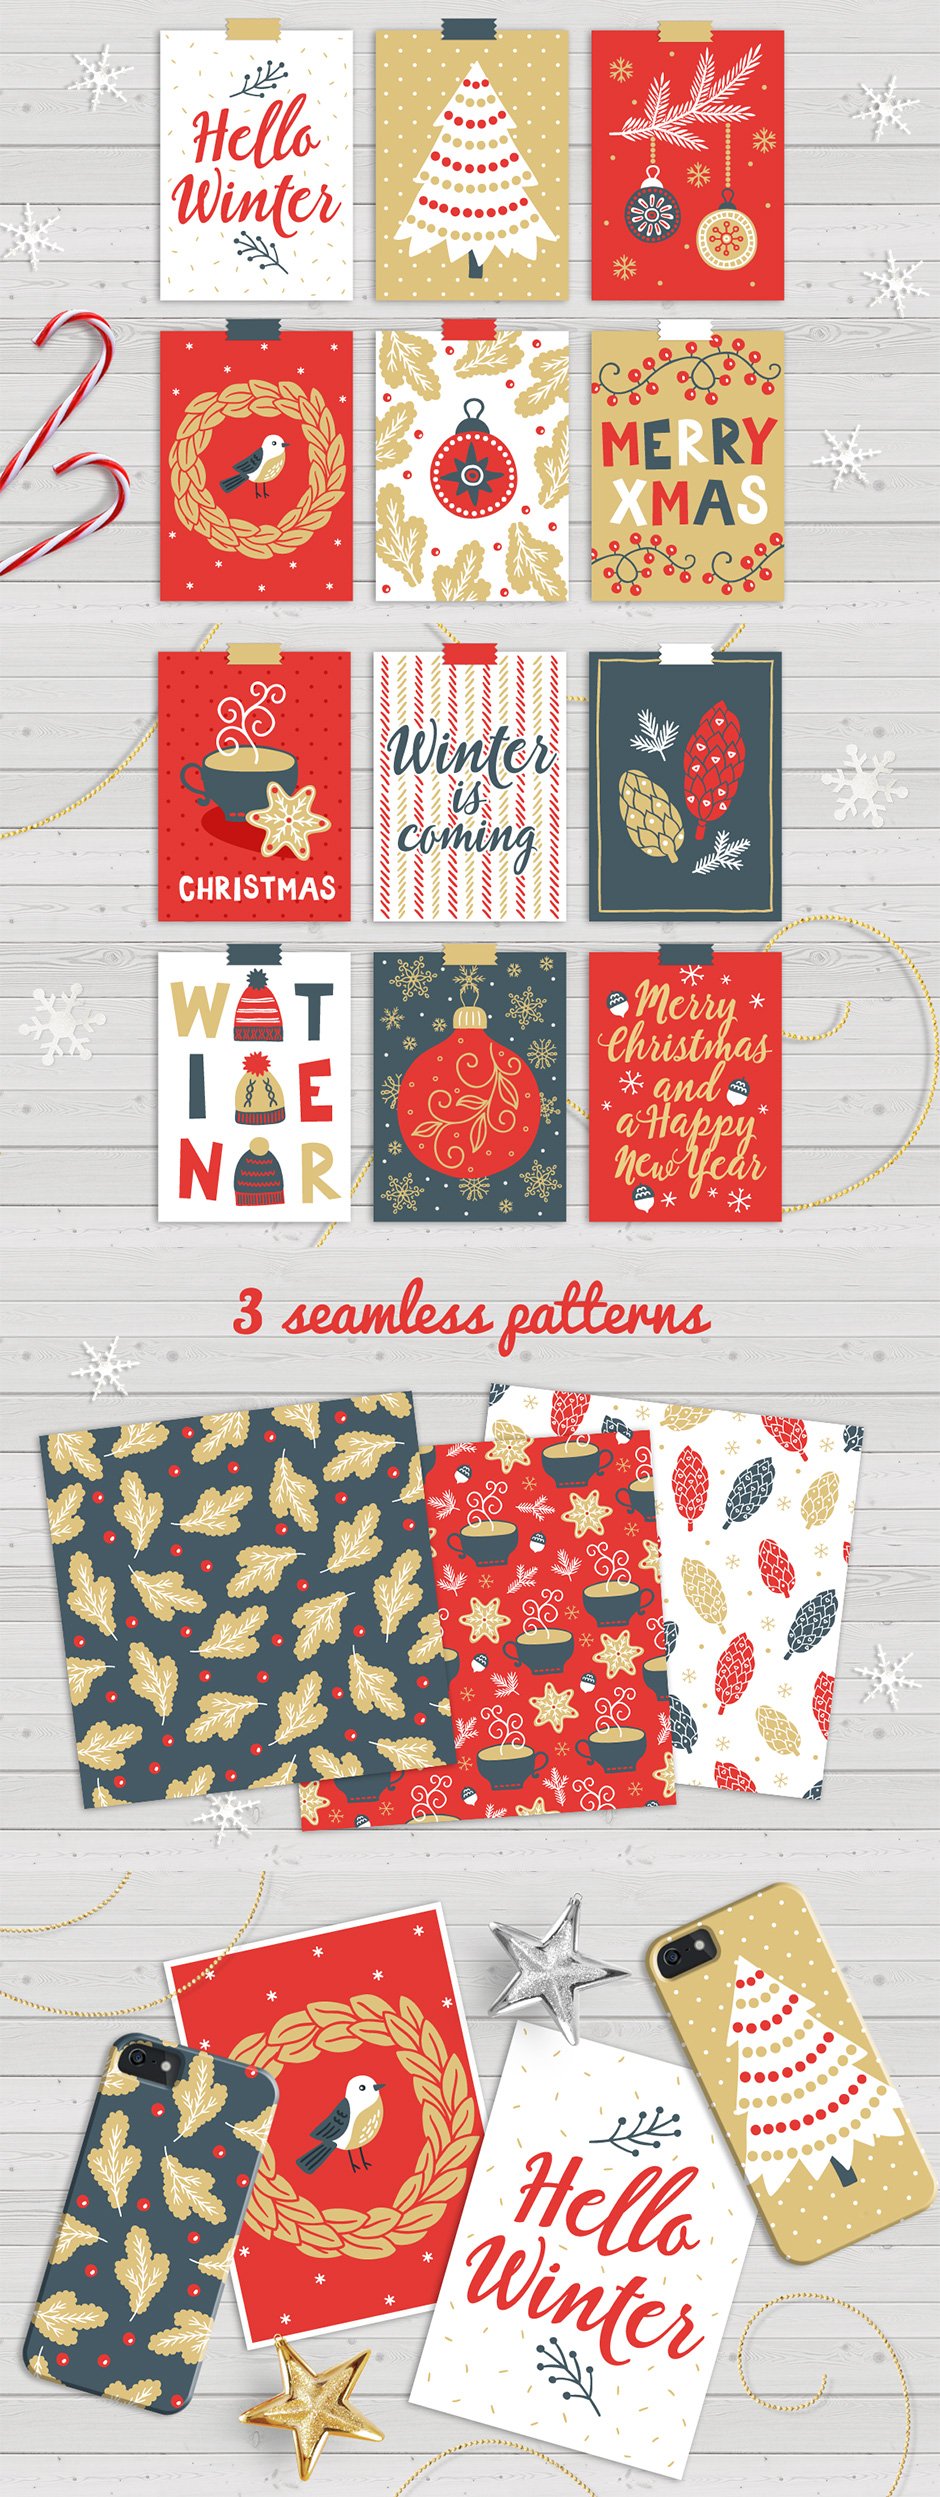 12 Christmas Cards + Bonus Patterns Volume 1